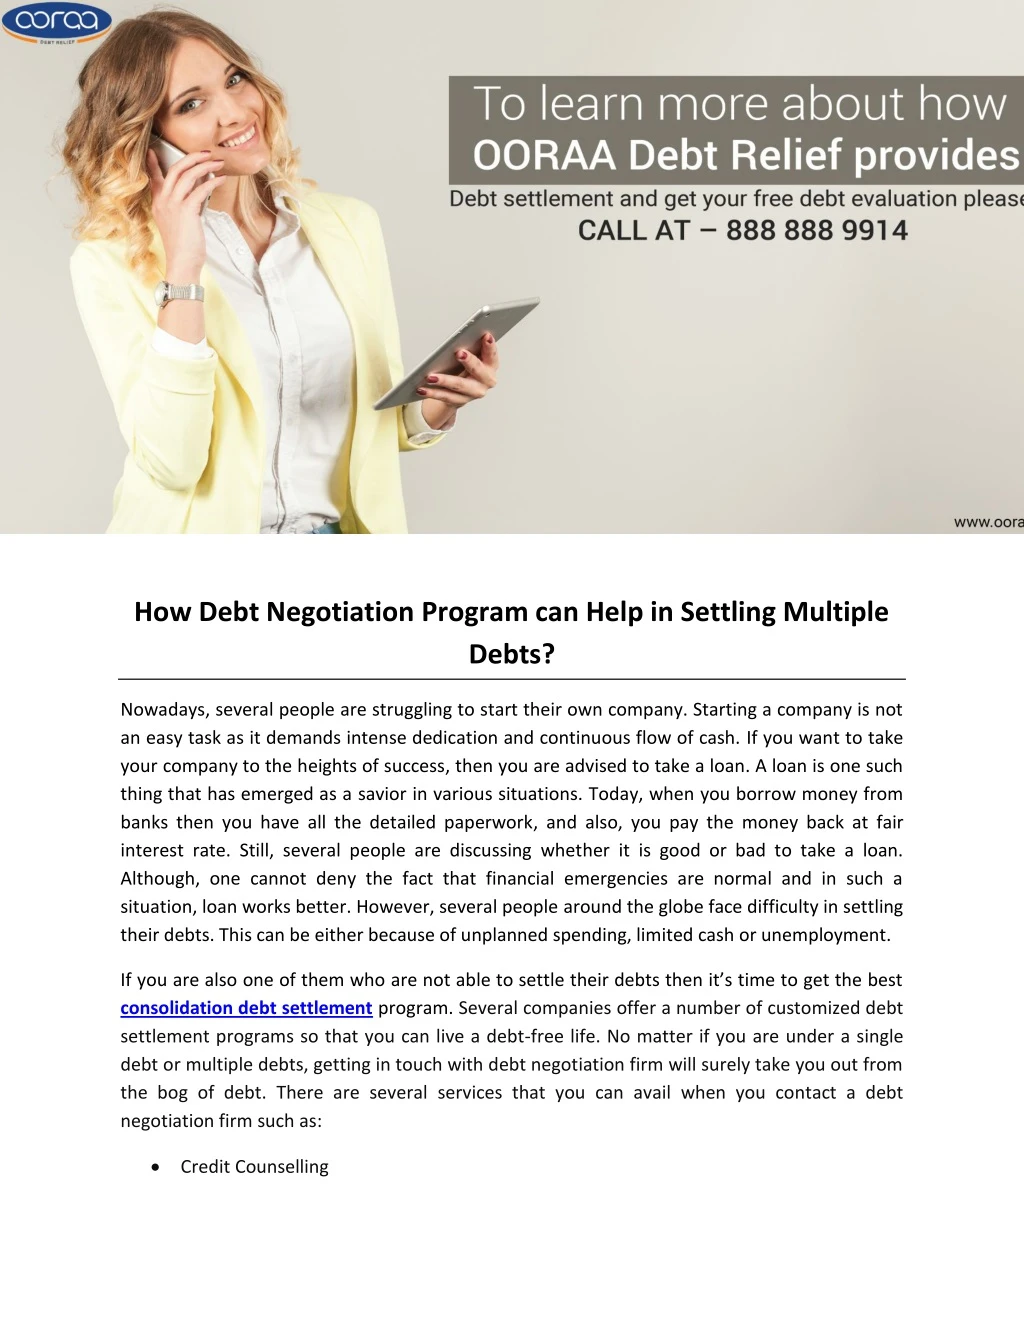 how debt negotiation program can help in settling